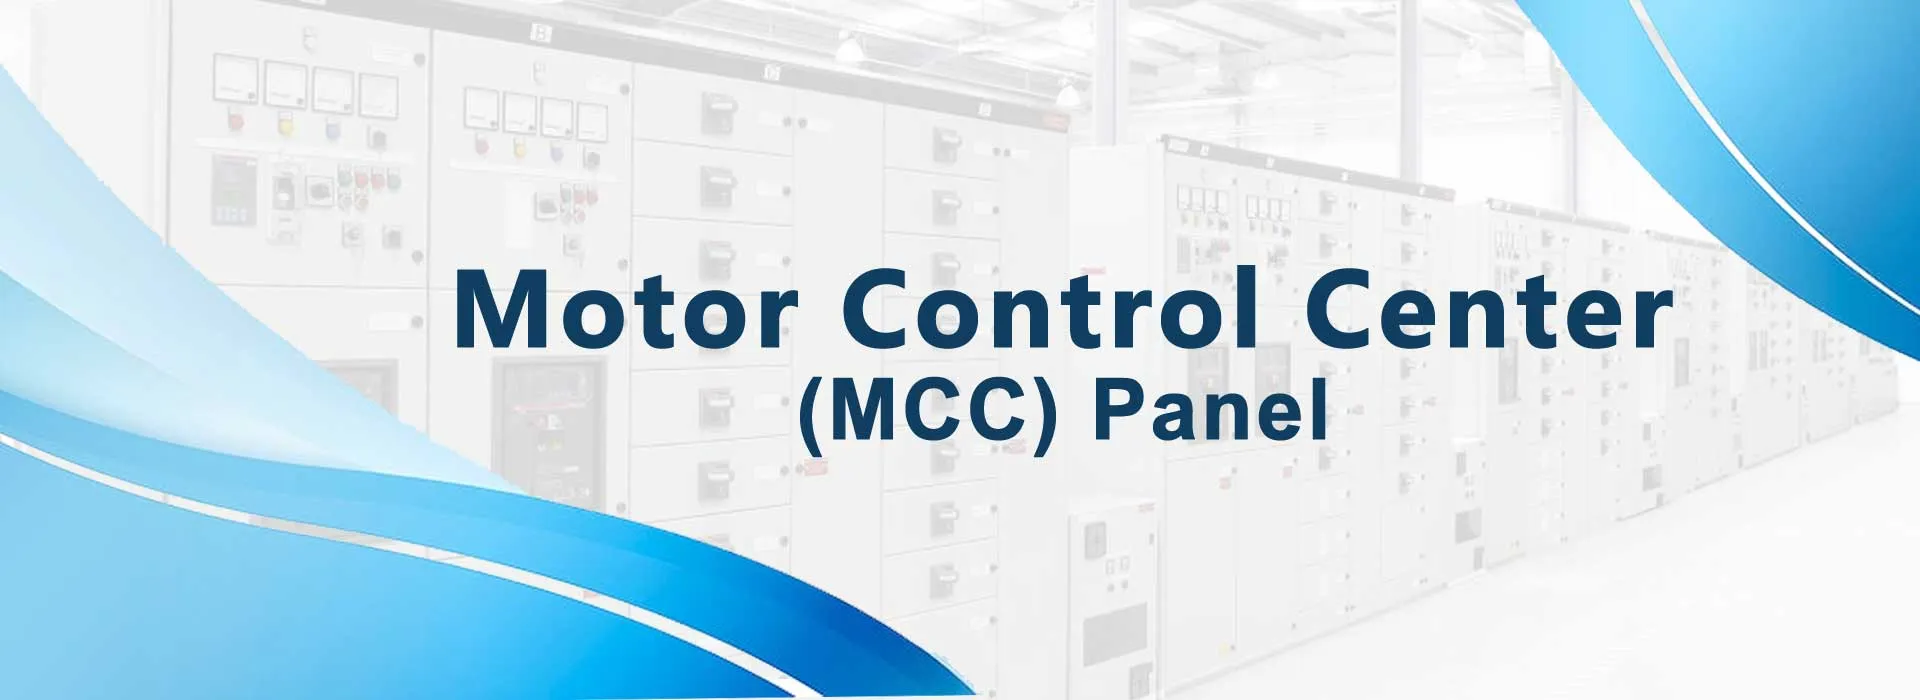 mcc panel manufacturer